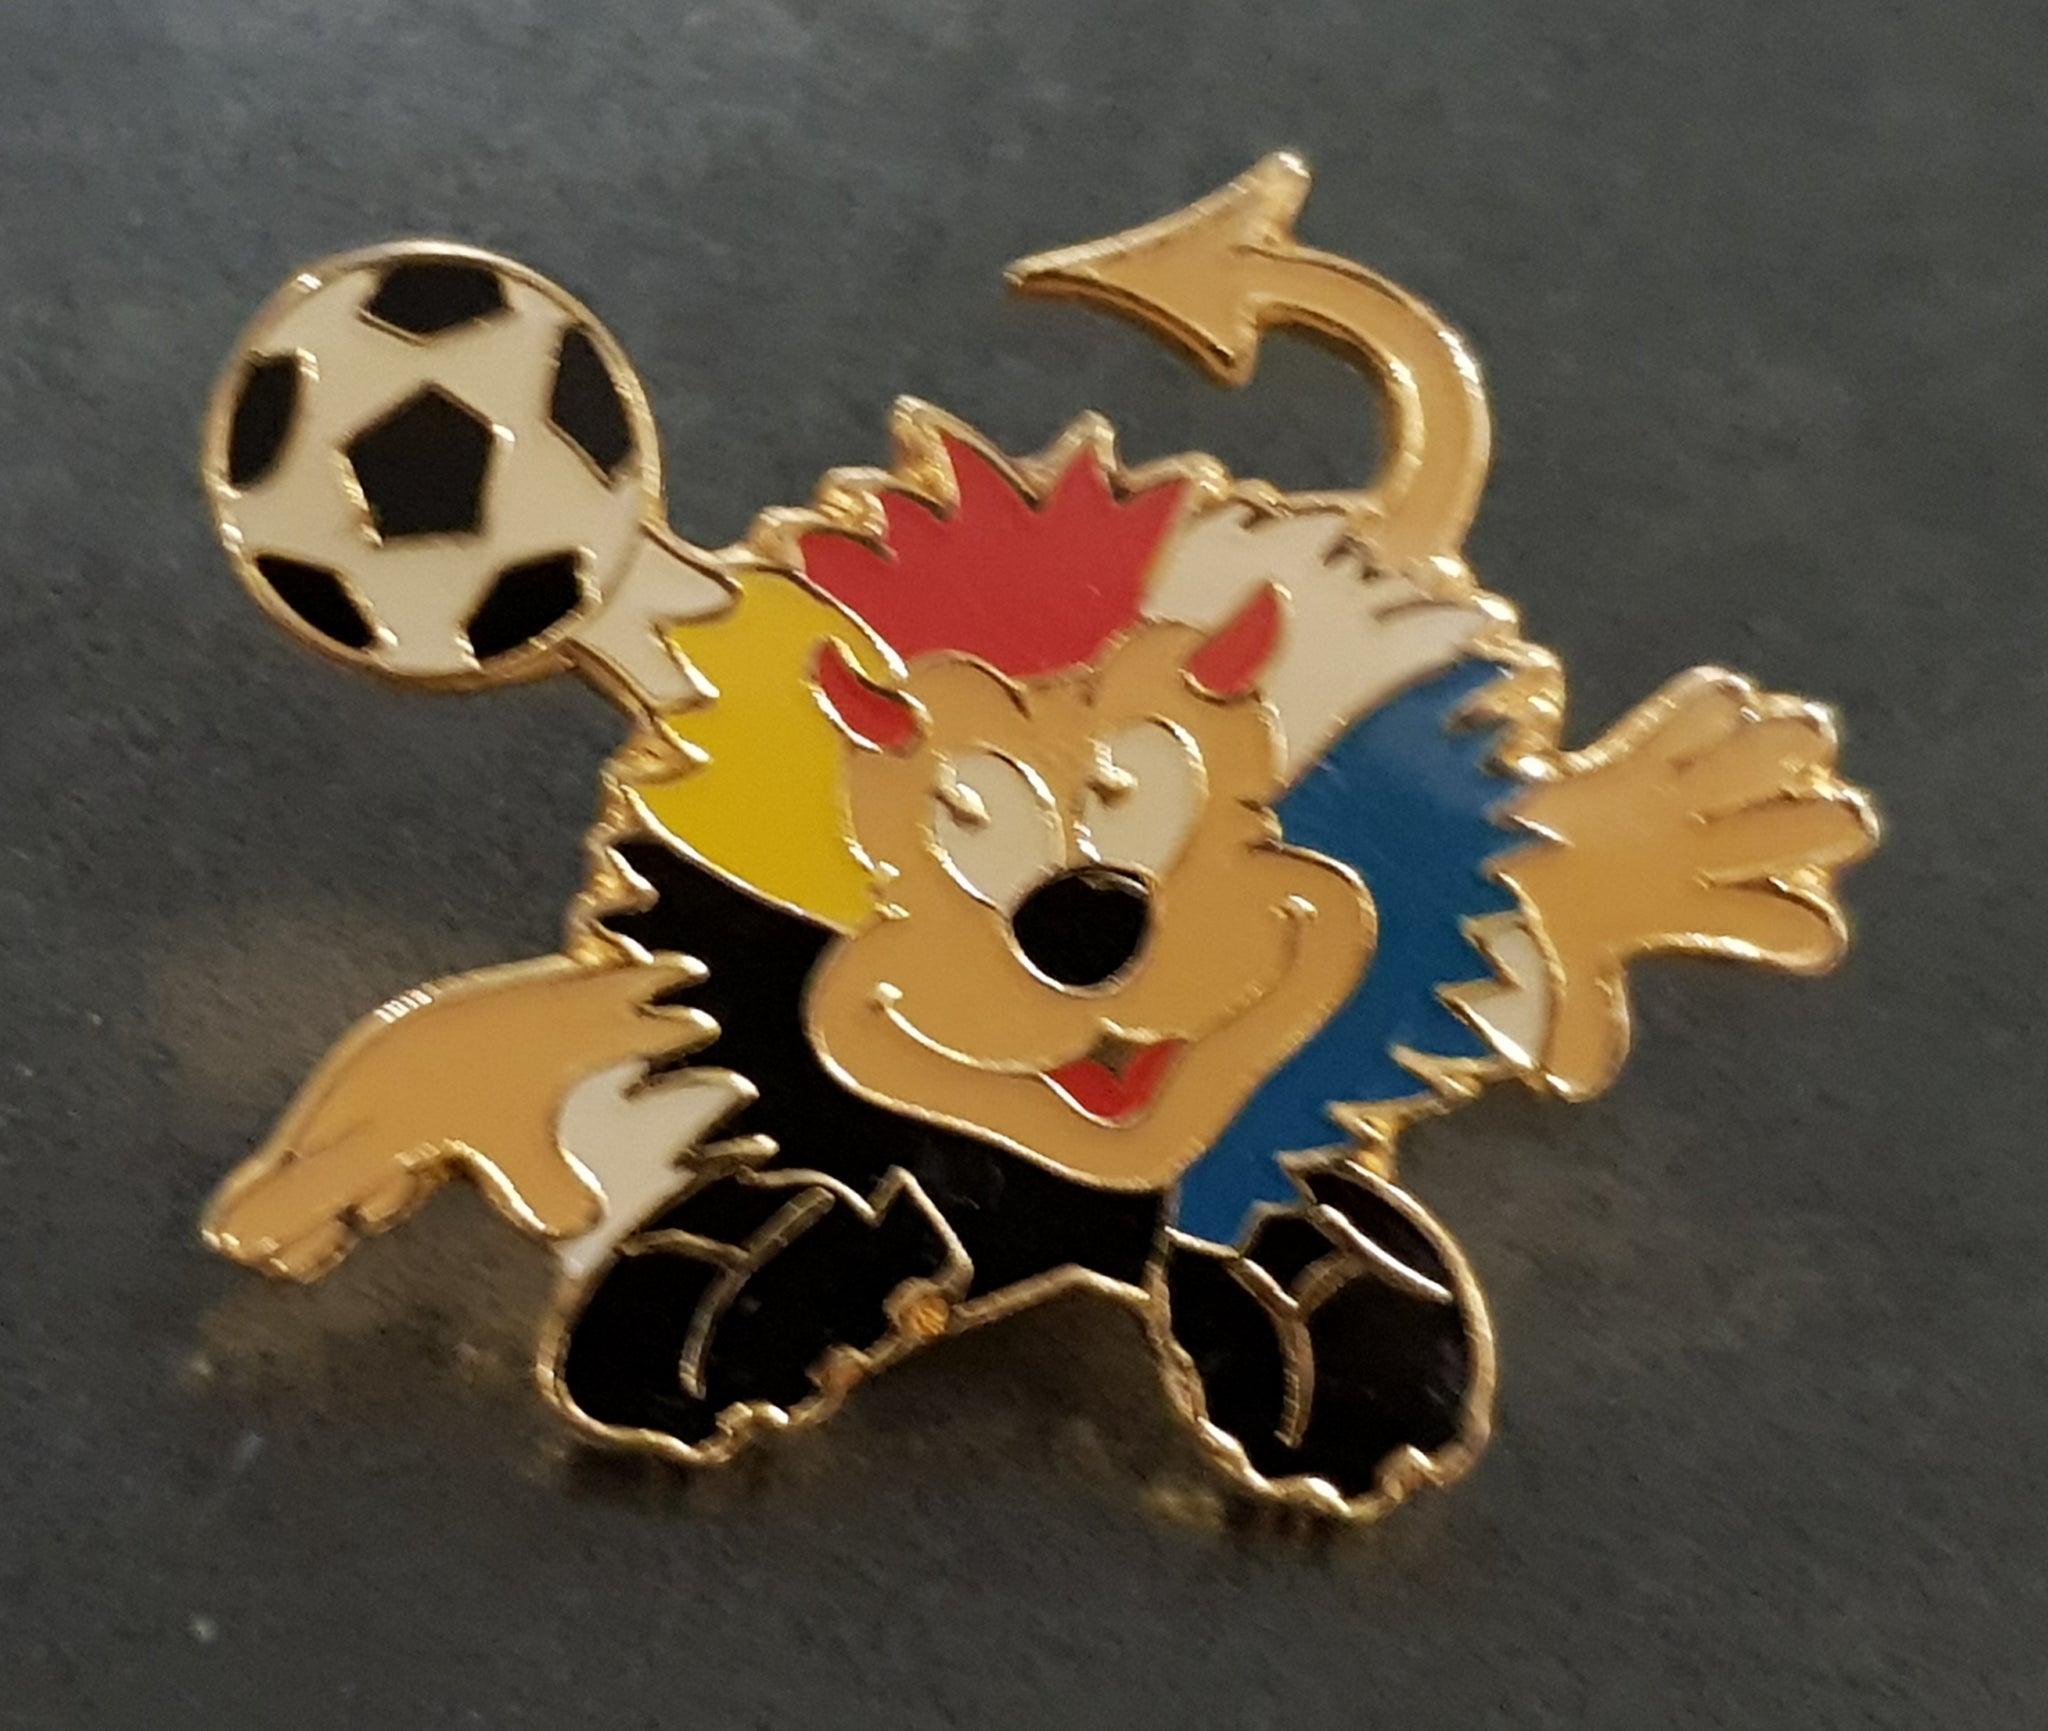 UEFA Euro 2000 Benelucky Mascot - Enamel Pin Design